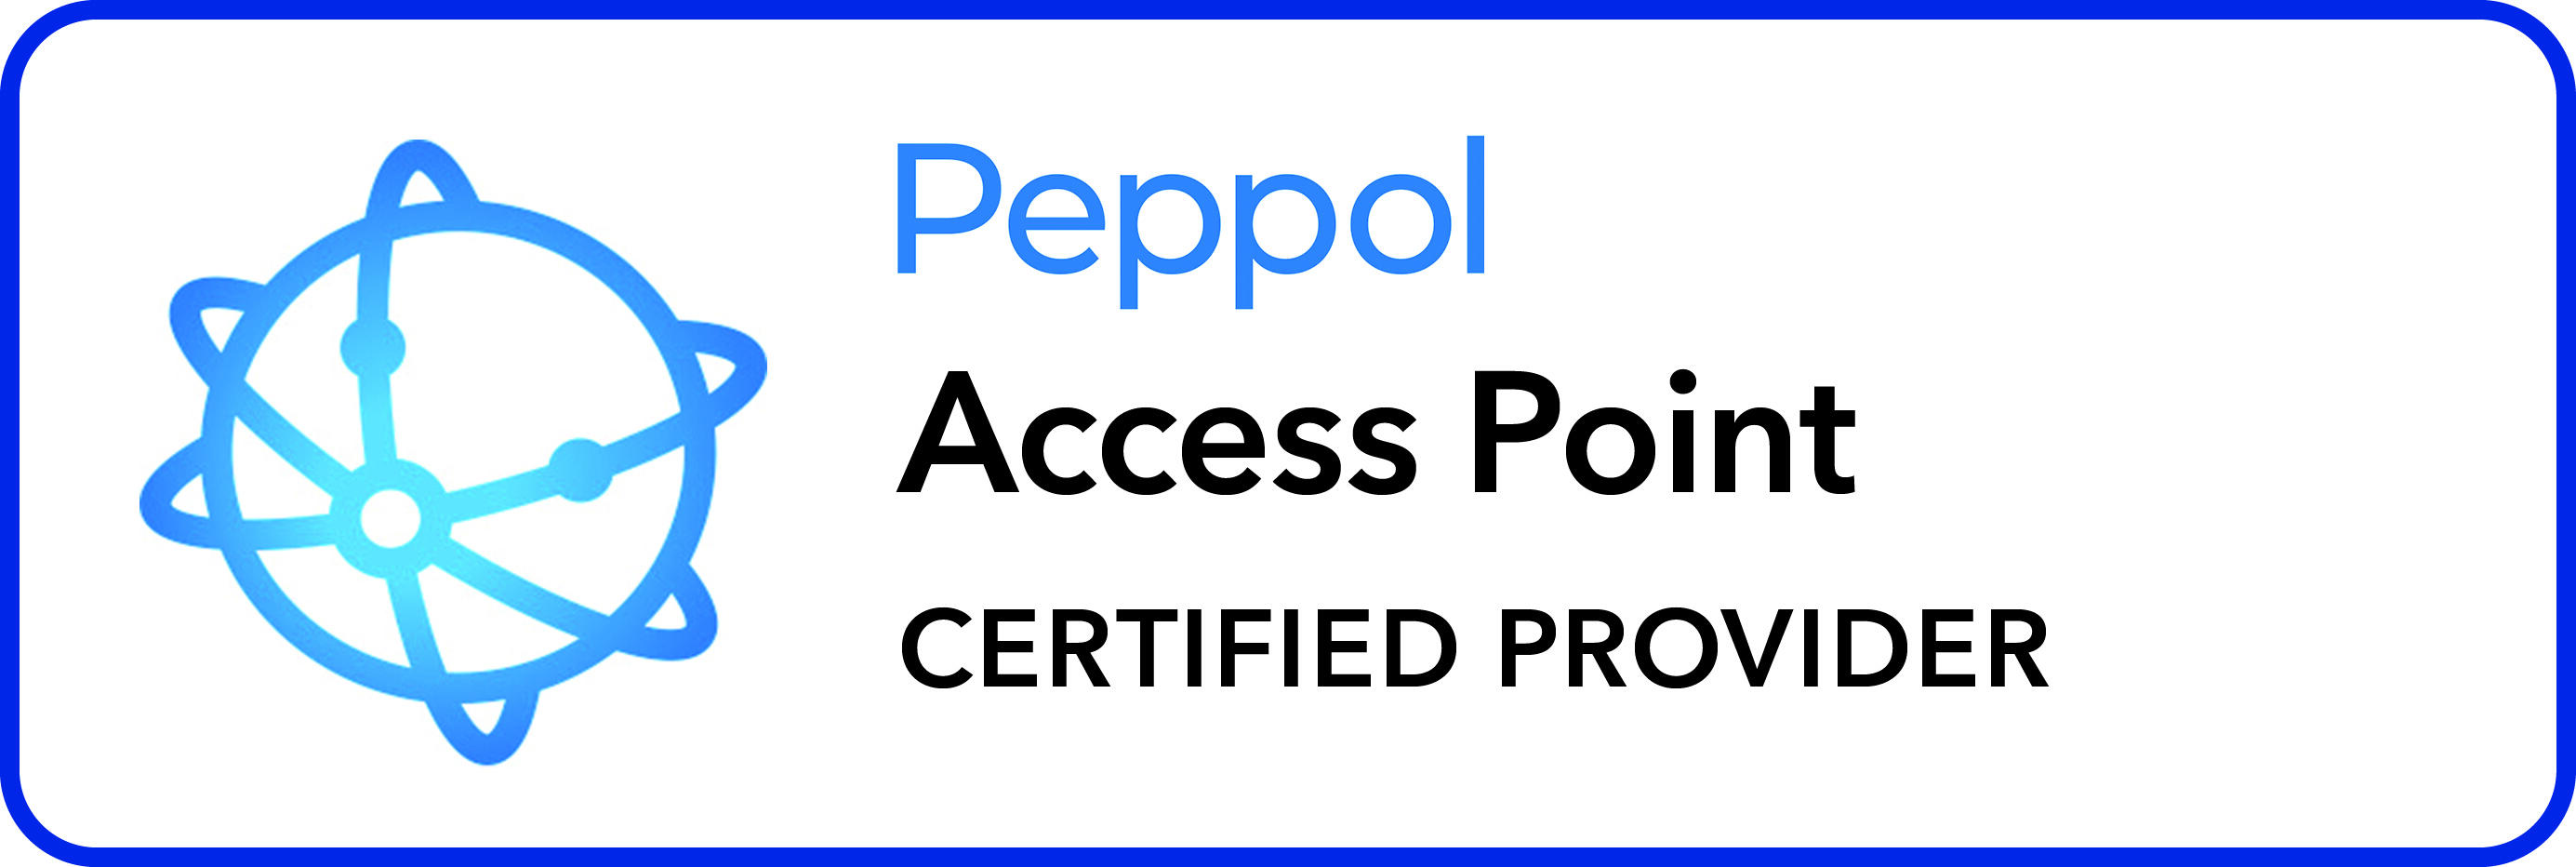 Peppol-Access-Point-CMYK